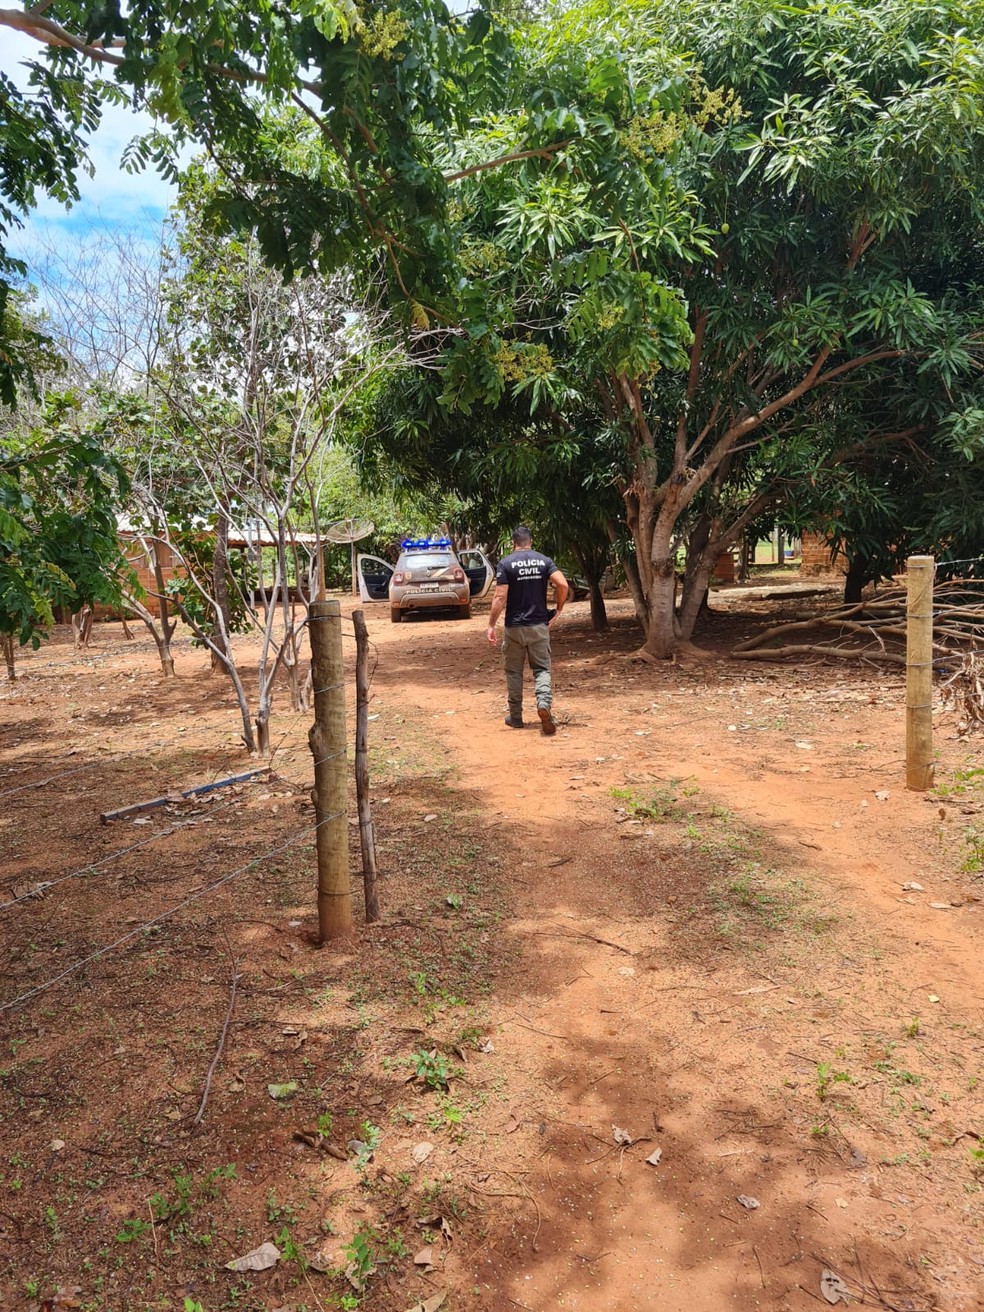 Propriedade rural onde foi encontrado o corpo da vítima enterrado — Foto: Polícia Civil/Cedida